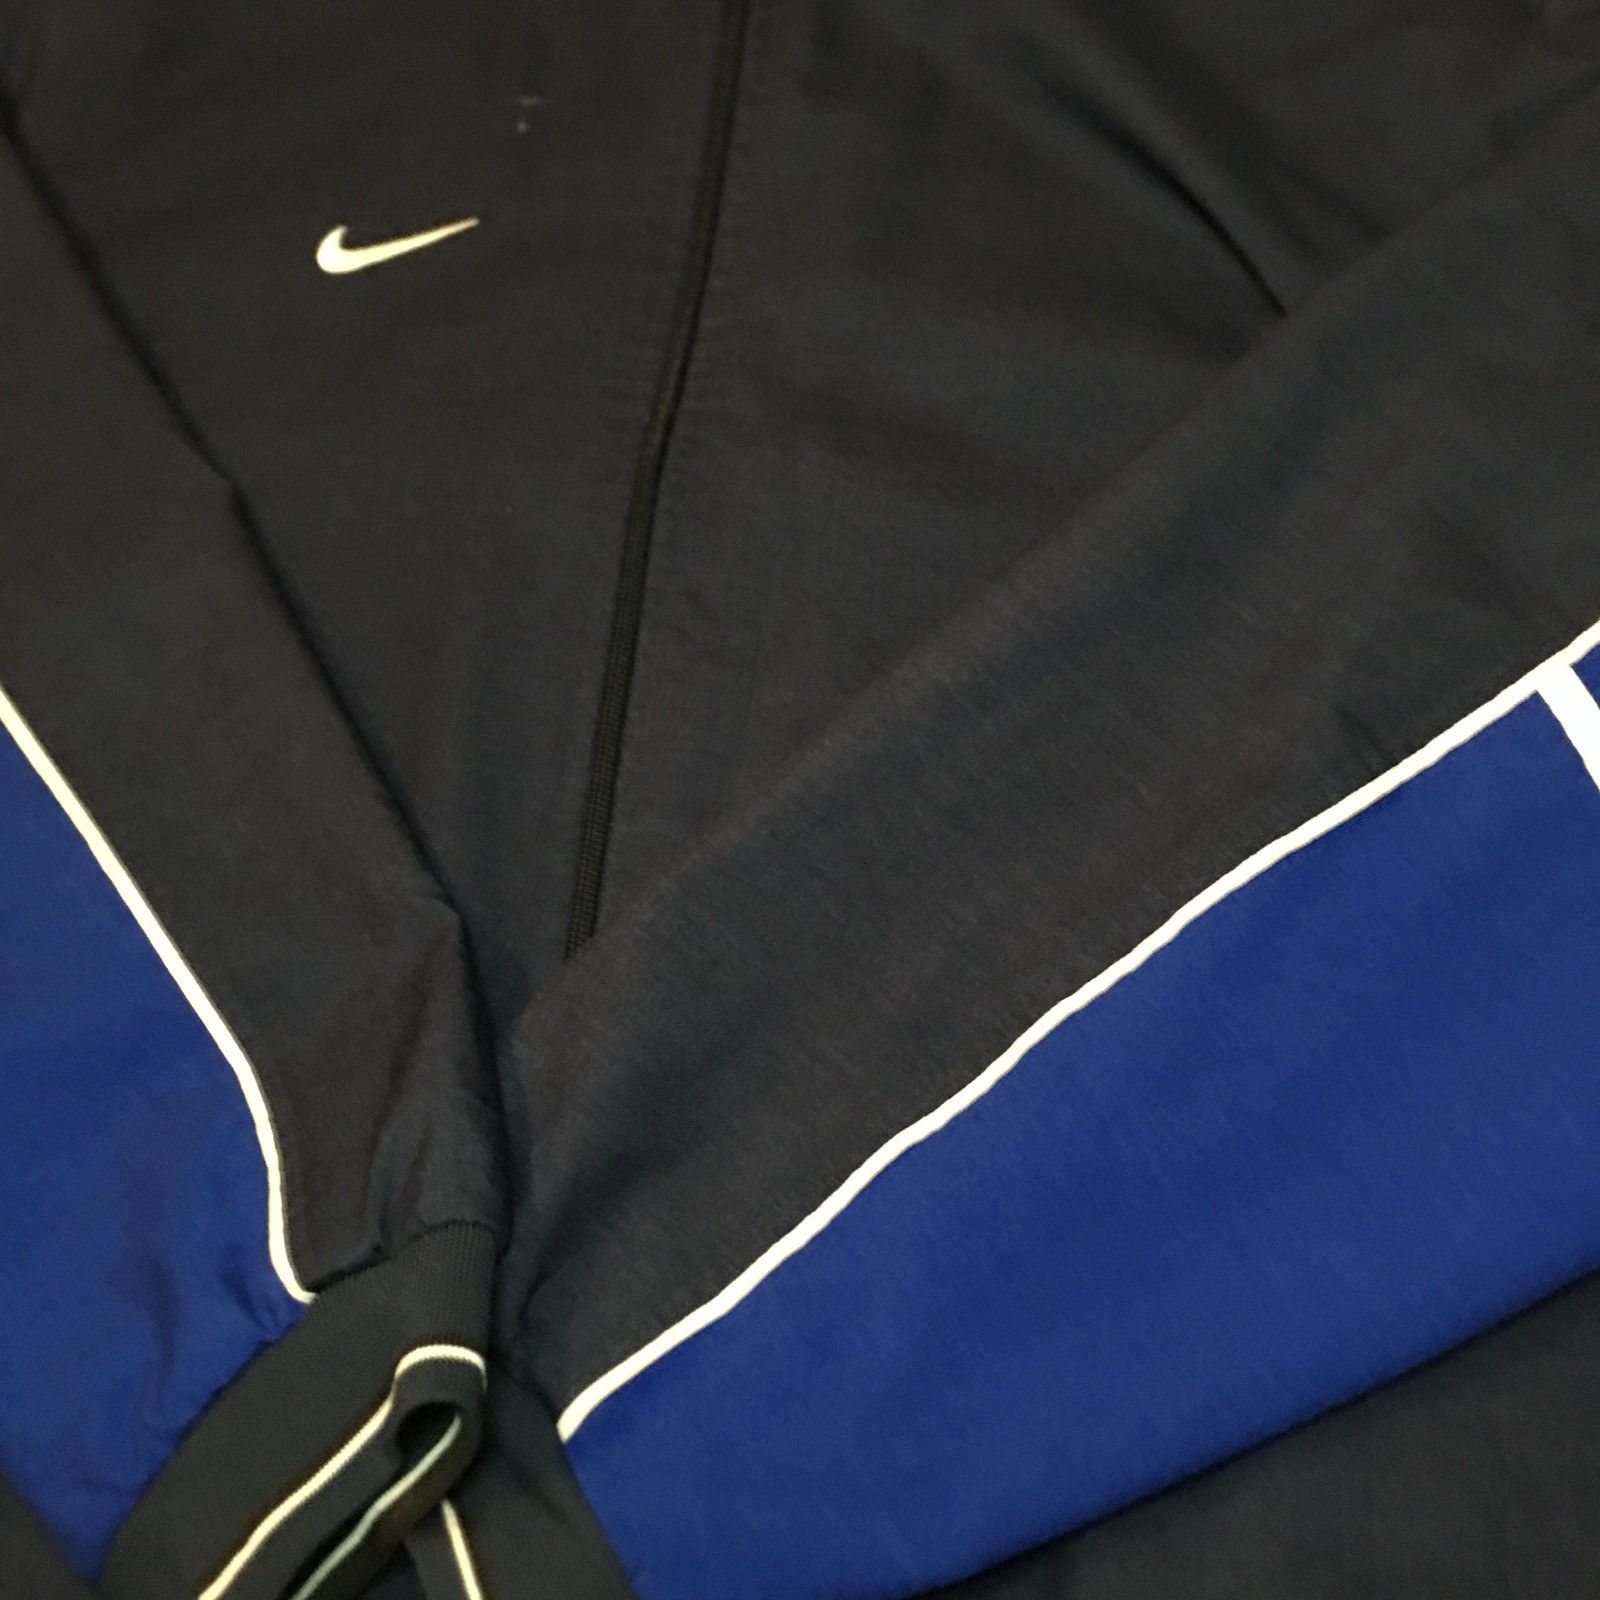 Nike Nike Track Jacket Size US XL / EU 56 / 4 - 2 Preview